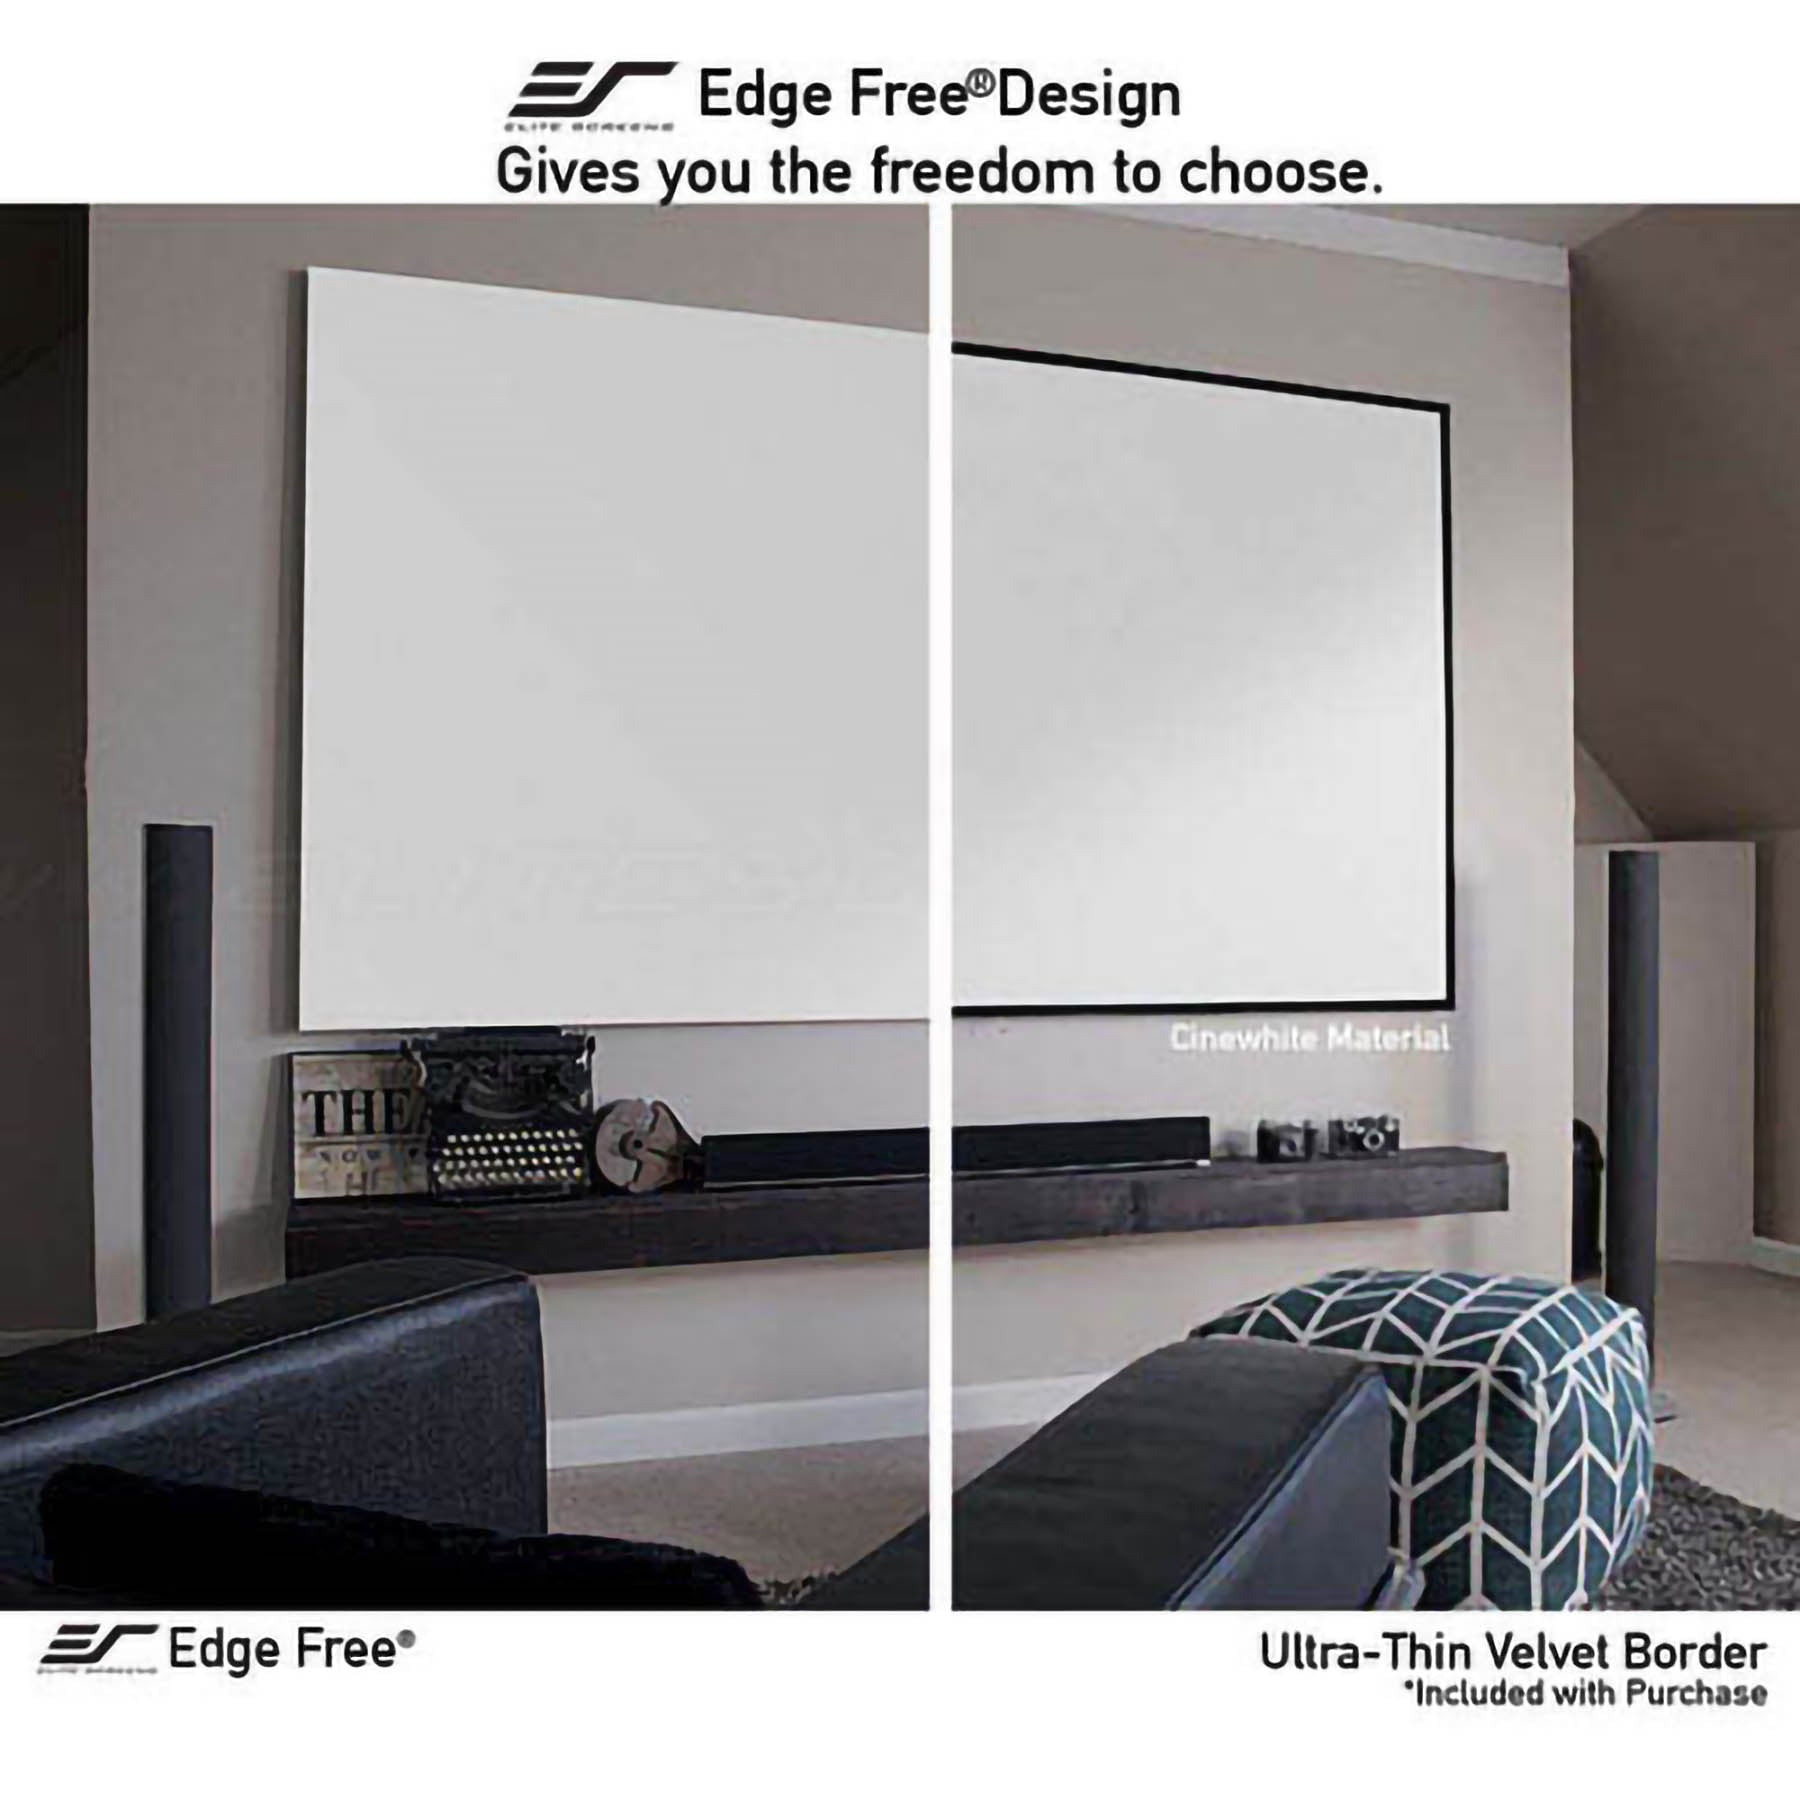 Elite Screens AR150WH2 Aeon Series 150" 16:9 4K Fixed Screen with EDGE FREE Frame